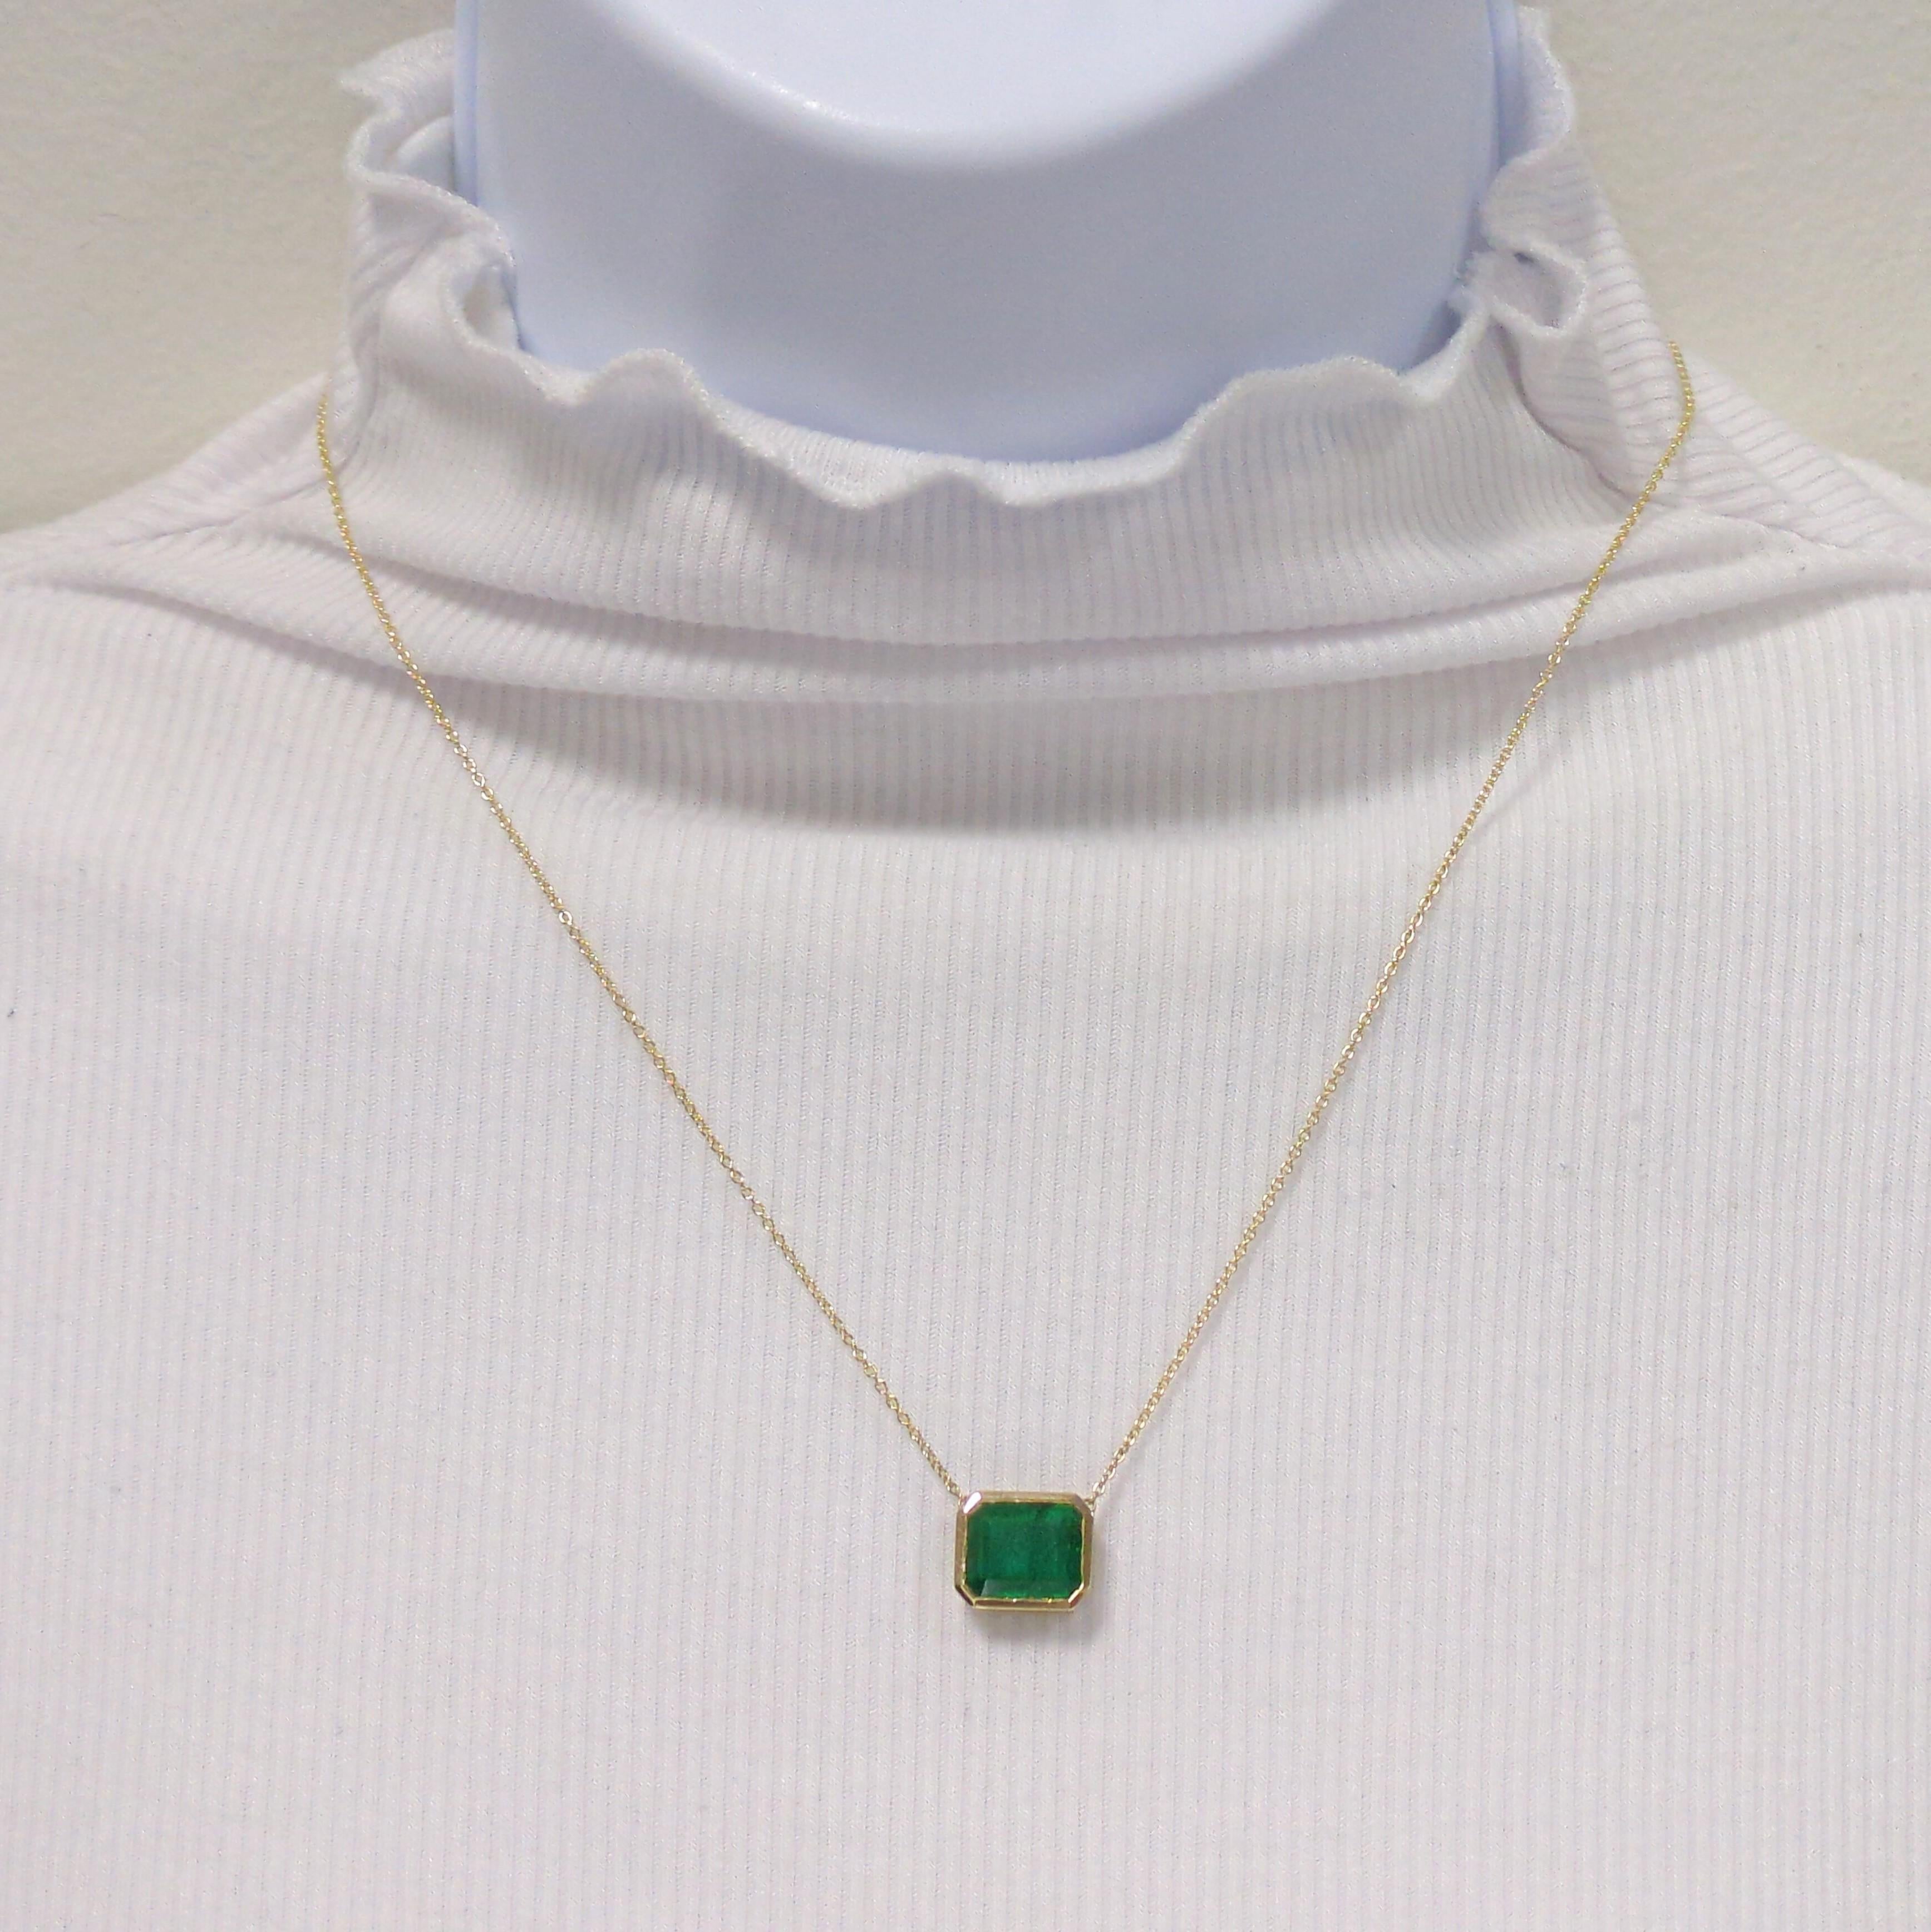 Beautiful 3.78 ct. emerald emerald cut in a handmade 18k yellow gold bezel and 18